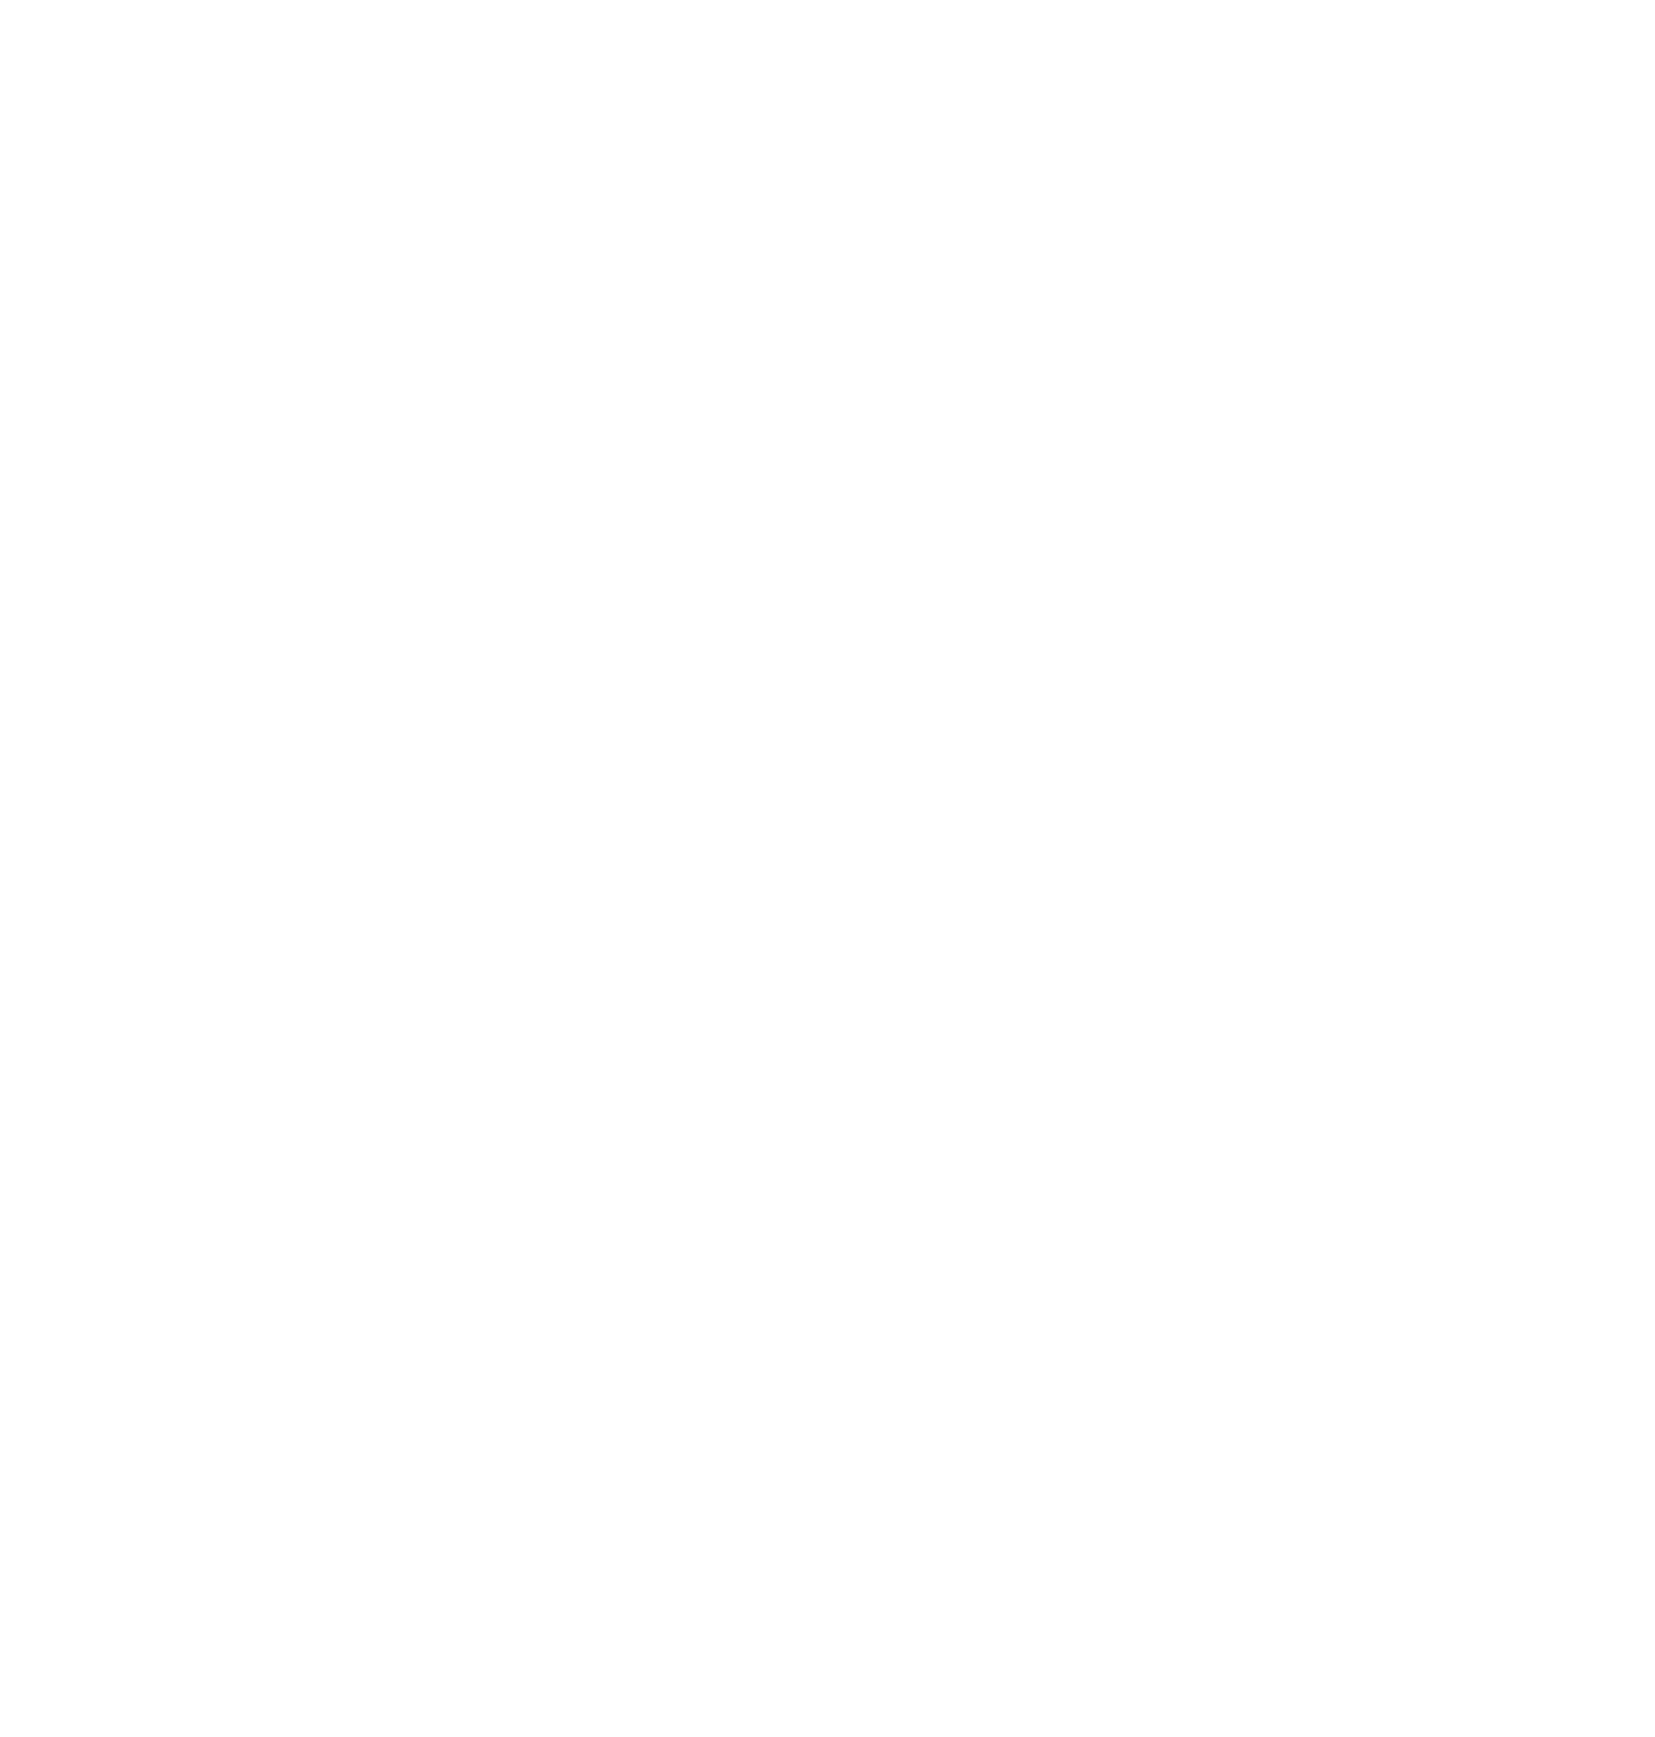 Mirum Pharmaceuticals logo for dark backgrounds (transparent PNG)